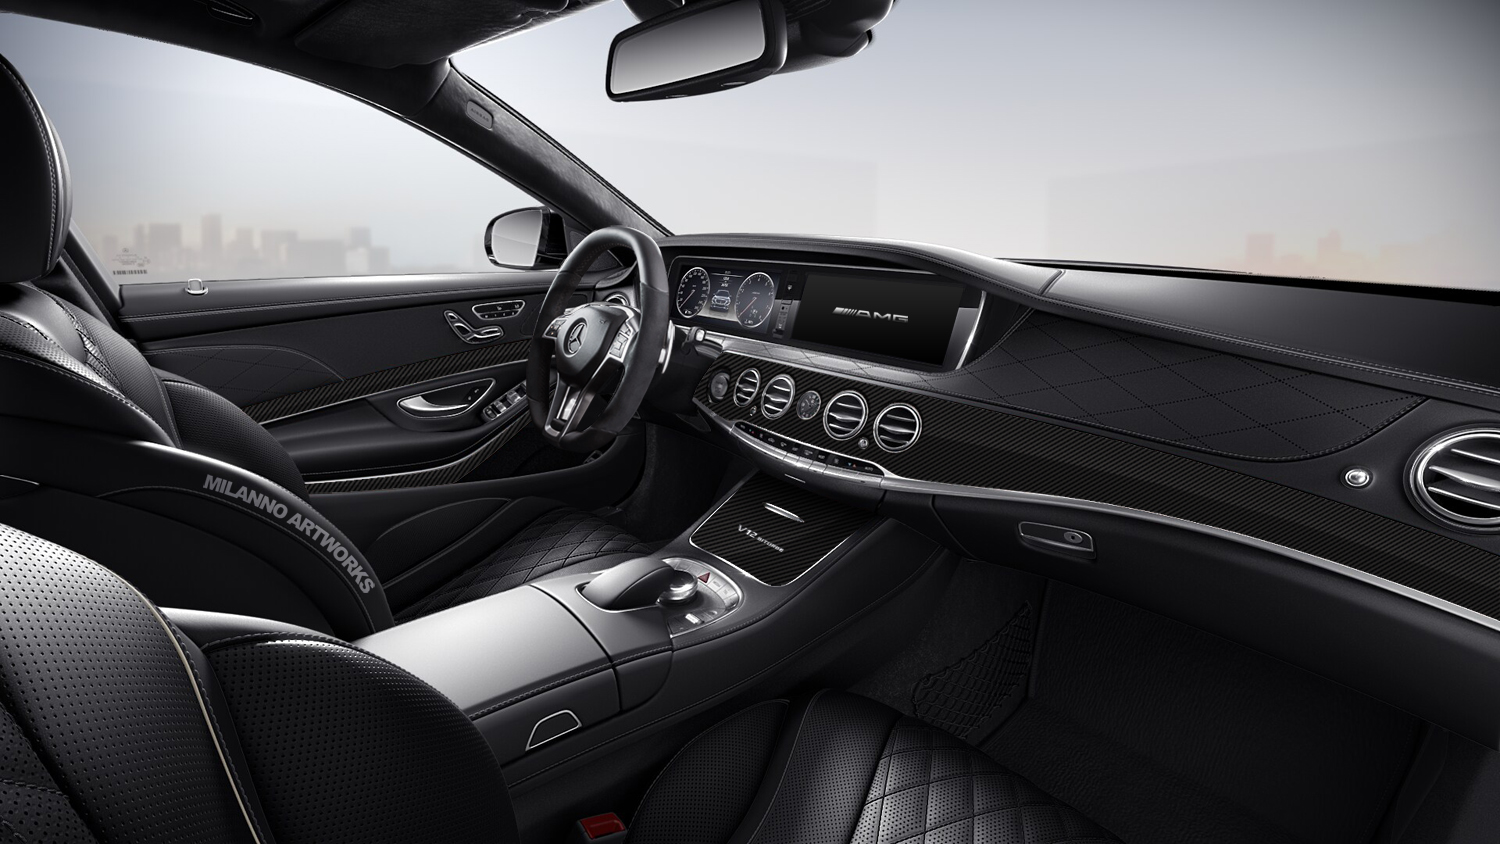 2014 Mercedes-Benz S65 AMG HD wallpapers, Desktop wallpaper - most viewed